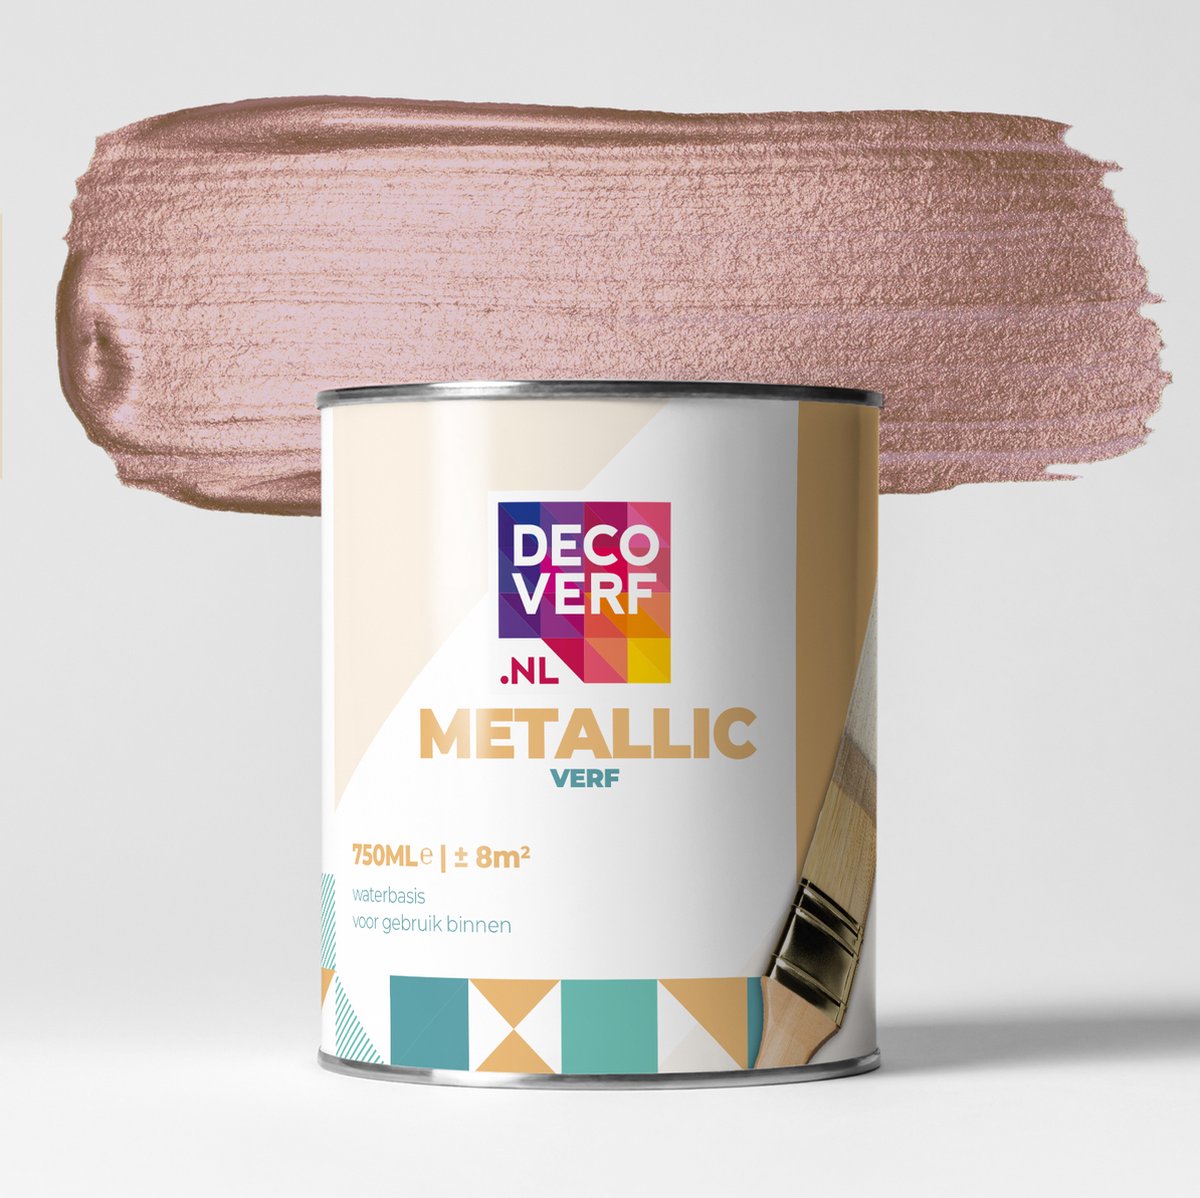 Decoverf metallic verf rosé, 750ml | bol.com